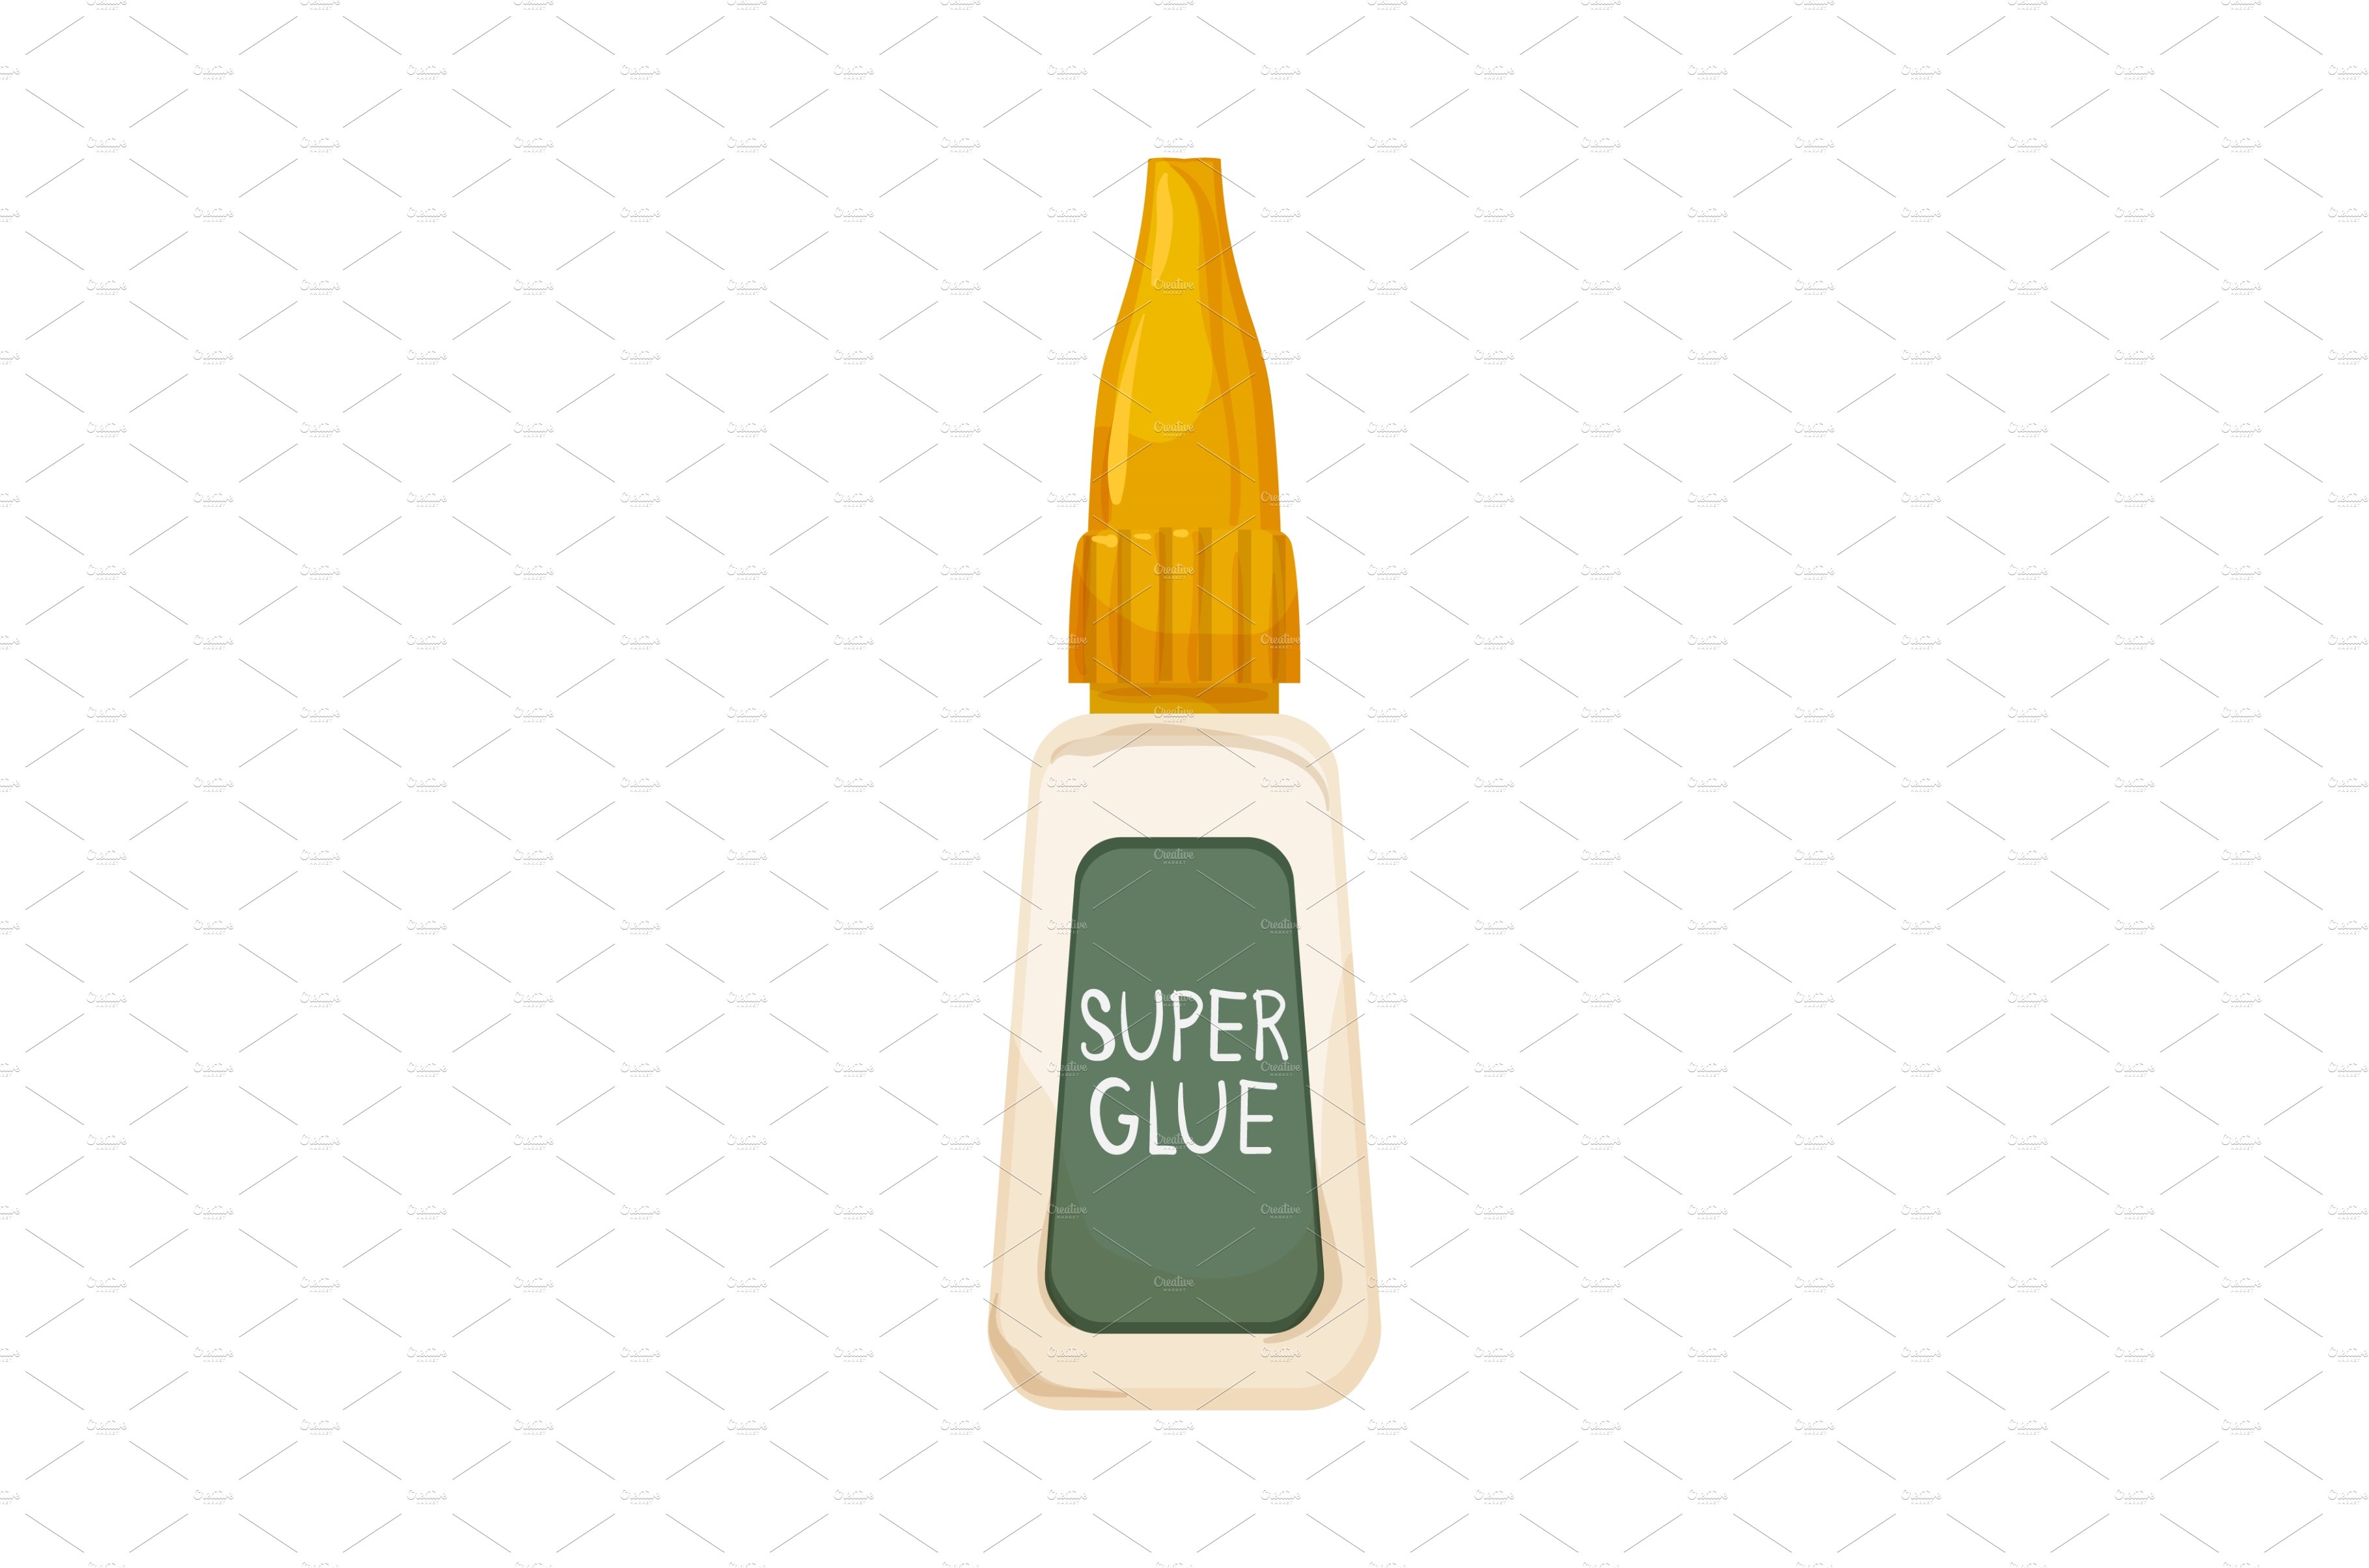 craft glue bottle cartoon vector cover image.